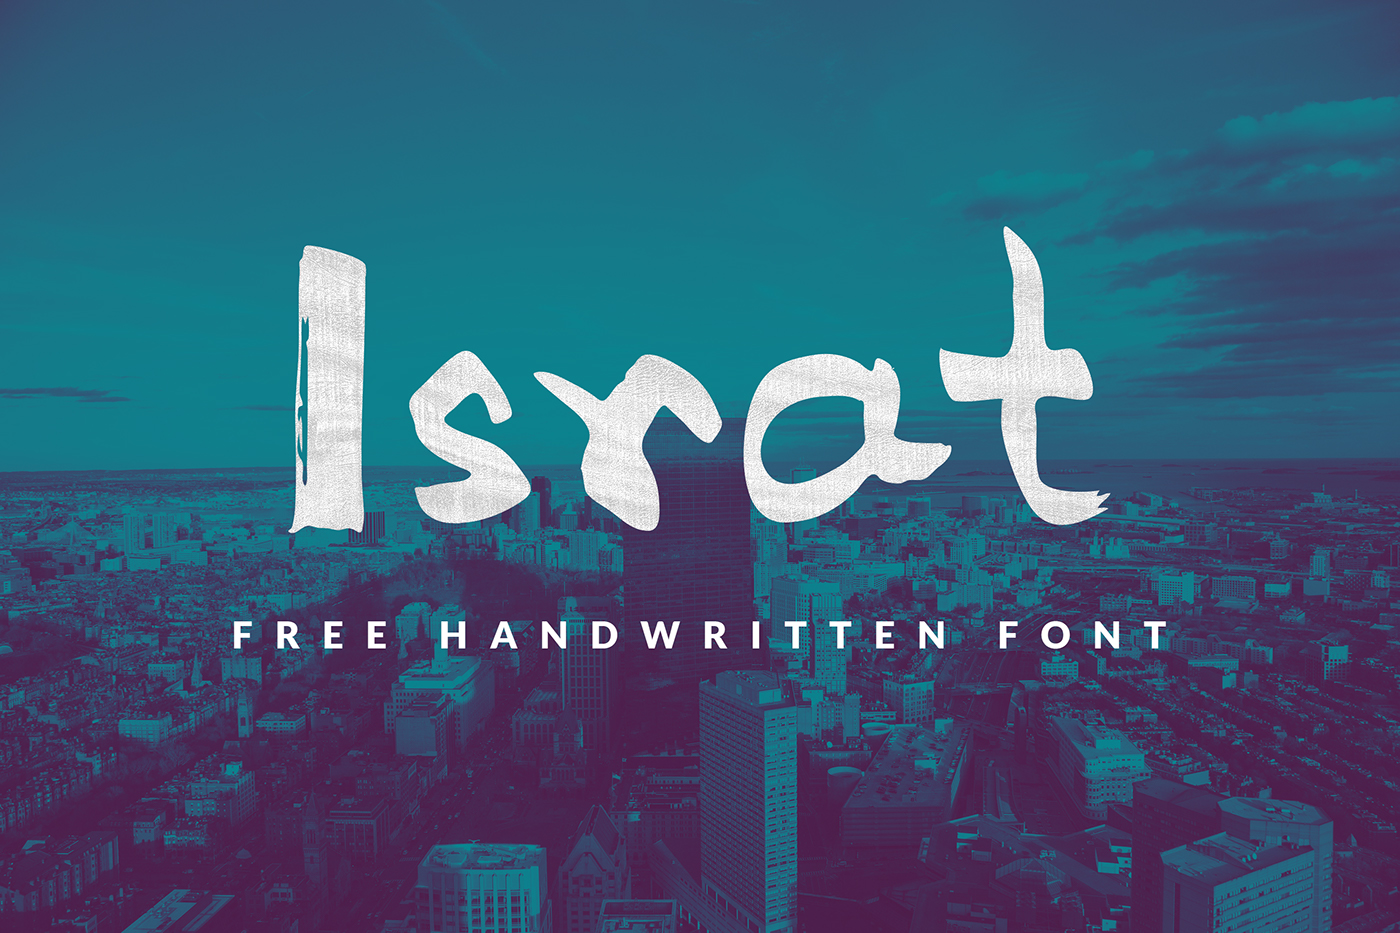 font Free font free handwritten display font handwriting font brushed semi brush brushed font free type